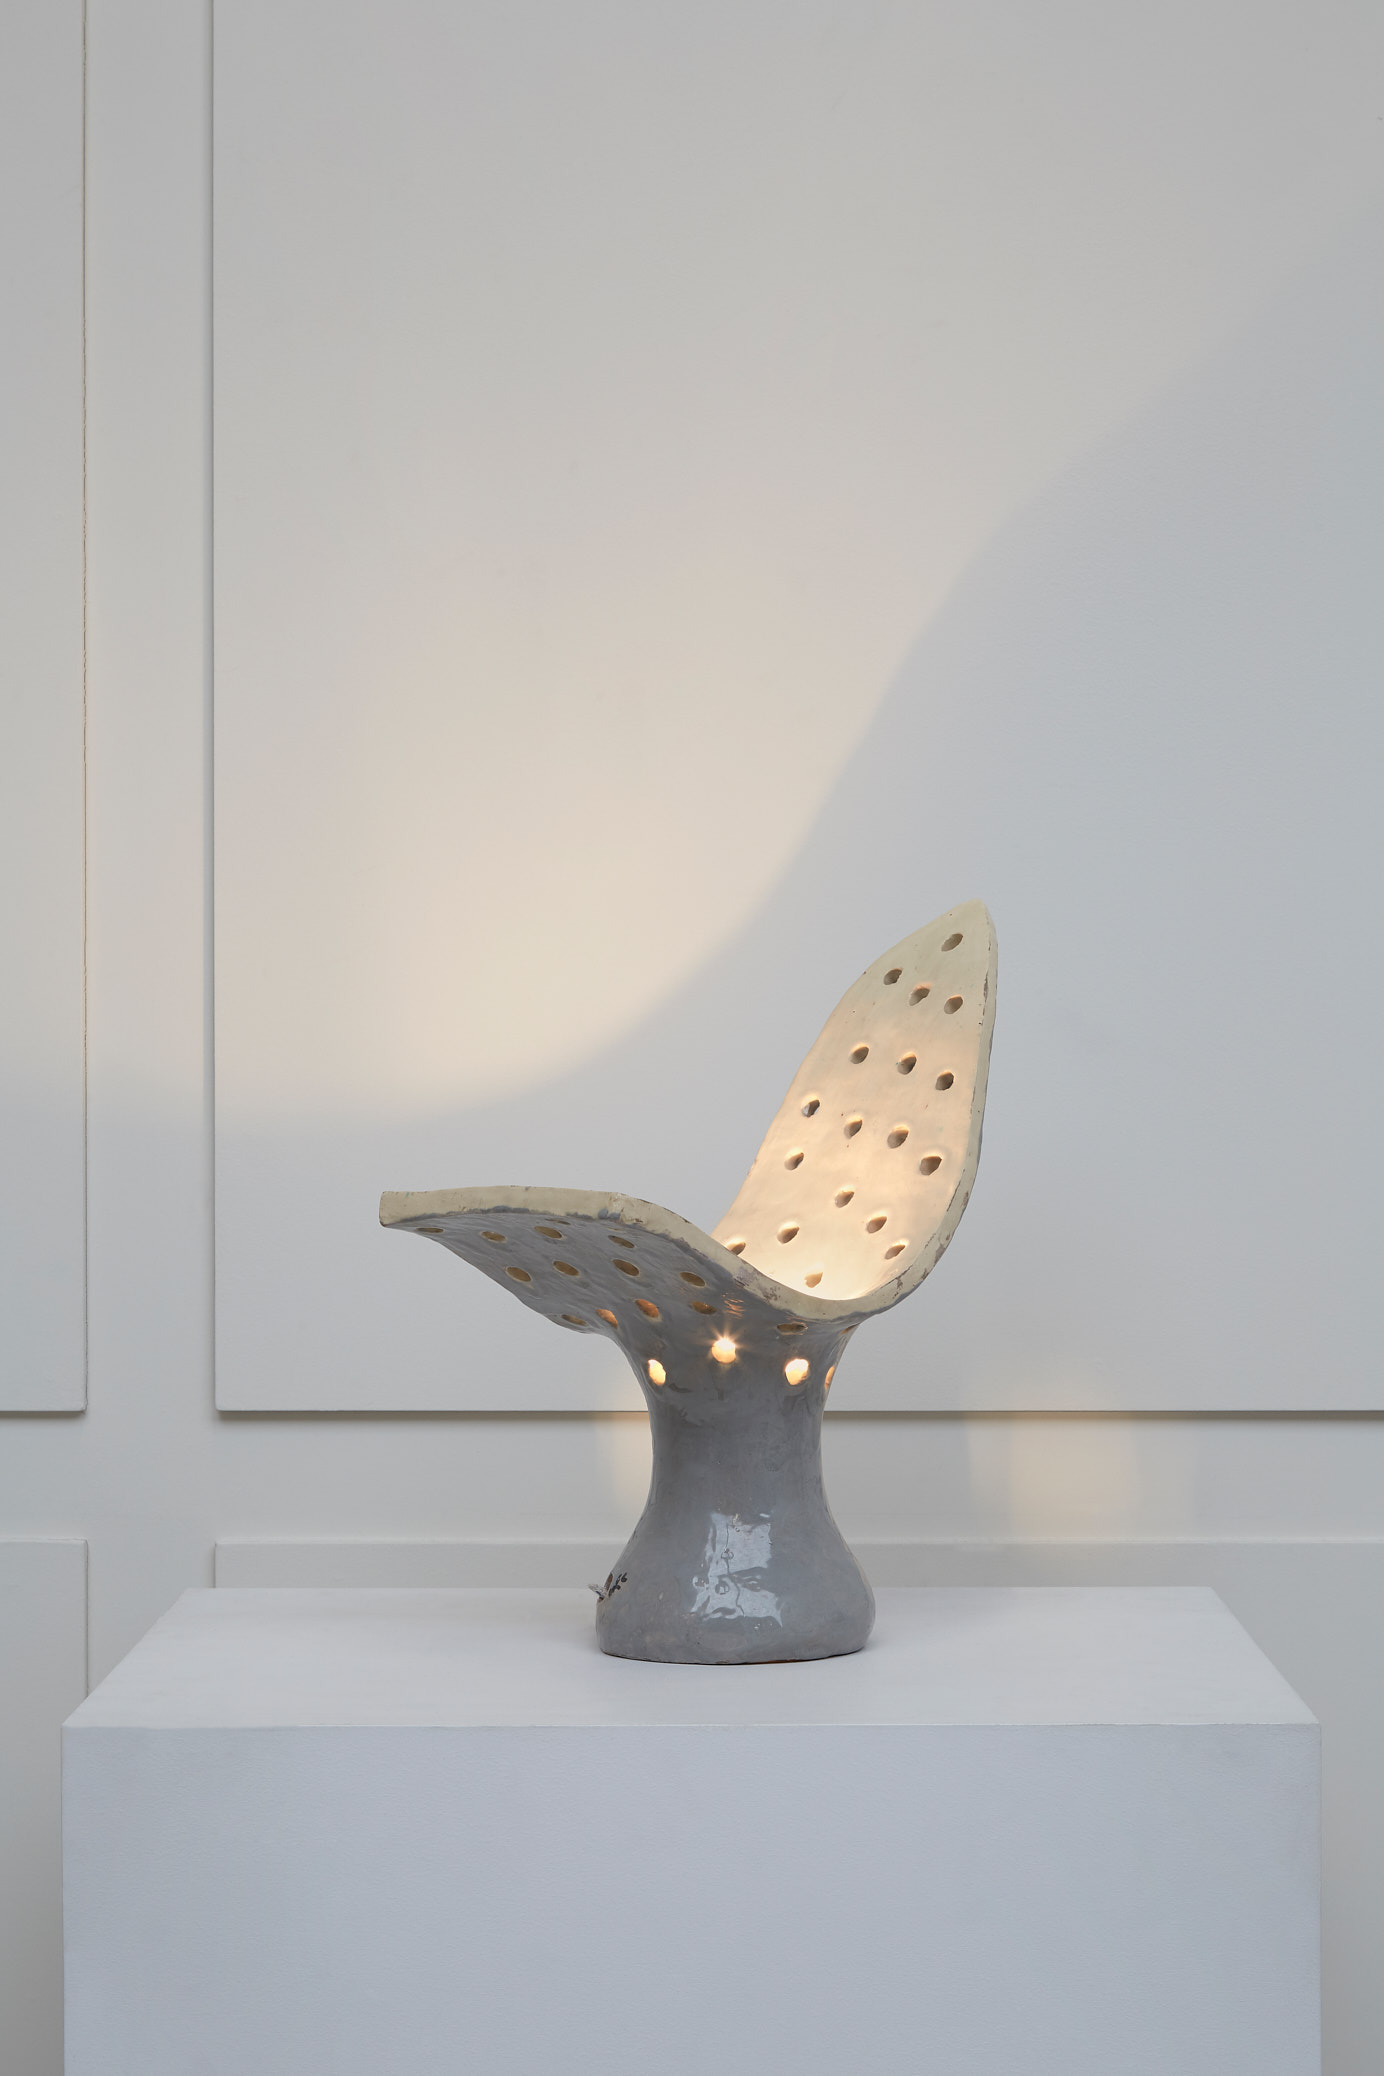 Guidette Carbonell, Lampe « Oiseau feuille », vue 01